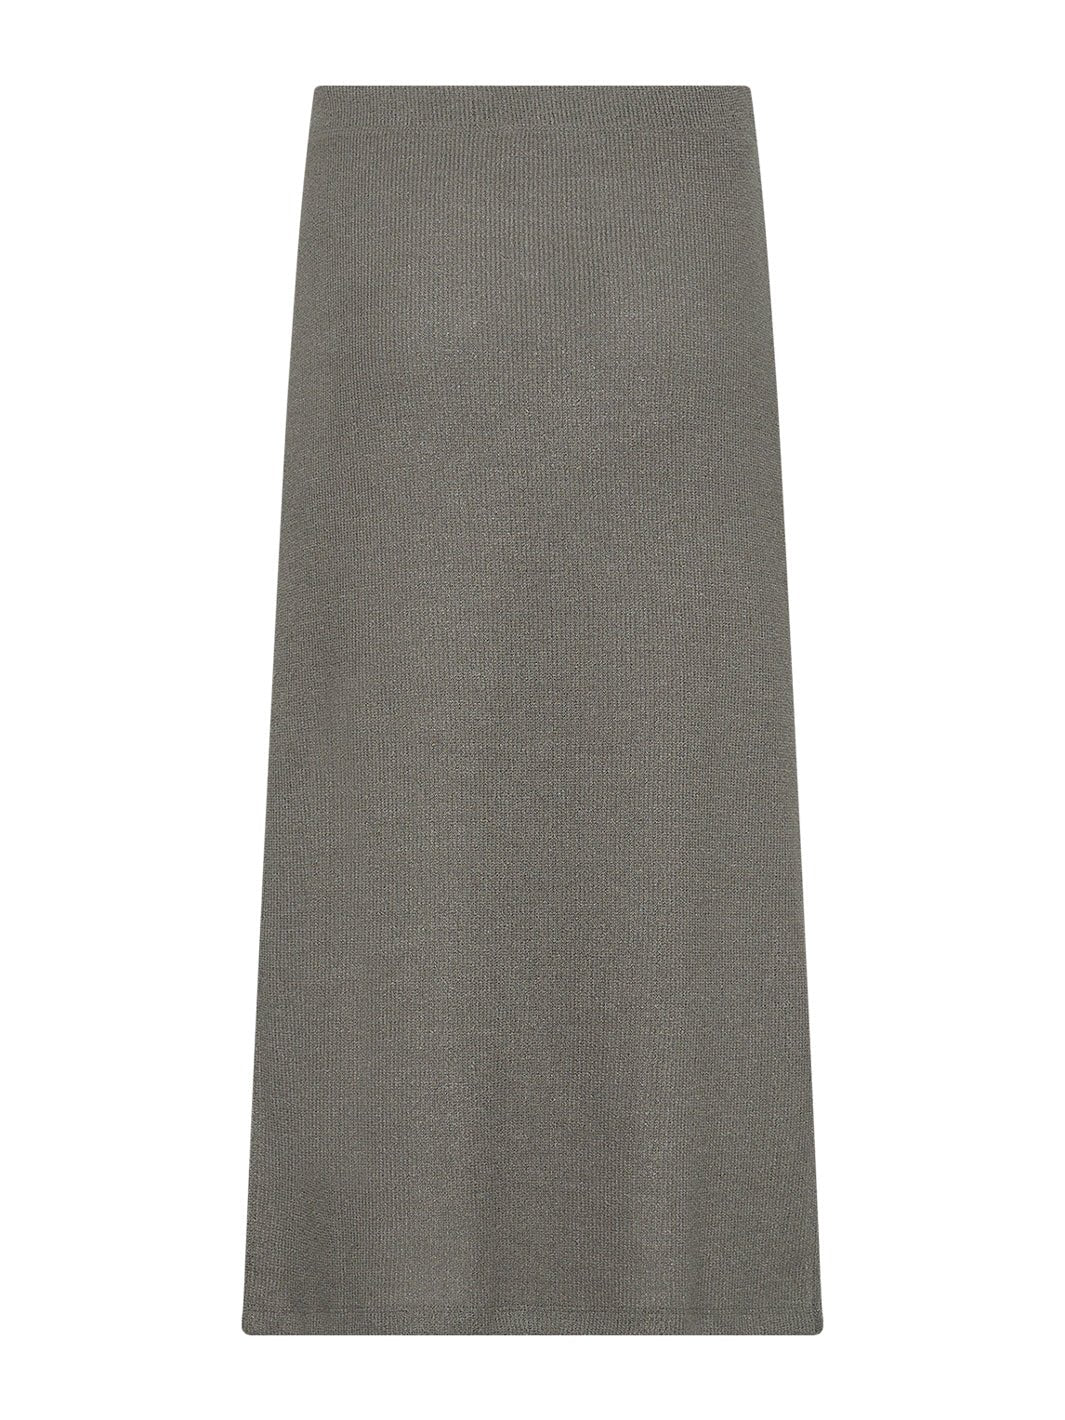 Soya Concept Delia 6 skirt dusty olive - Online-Mode